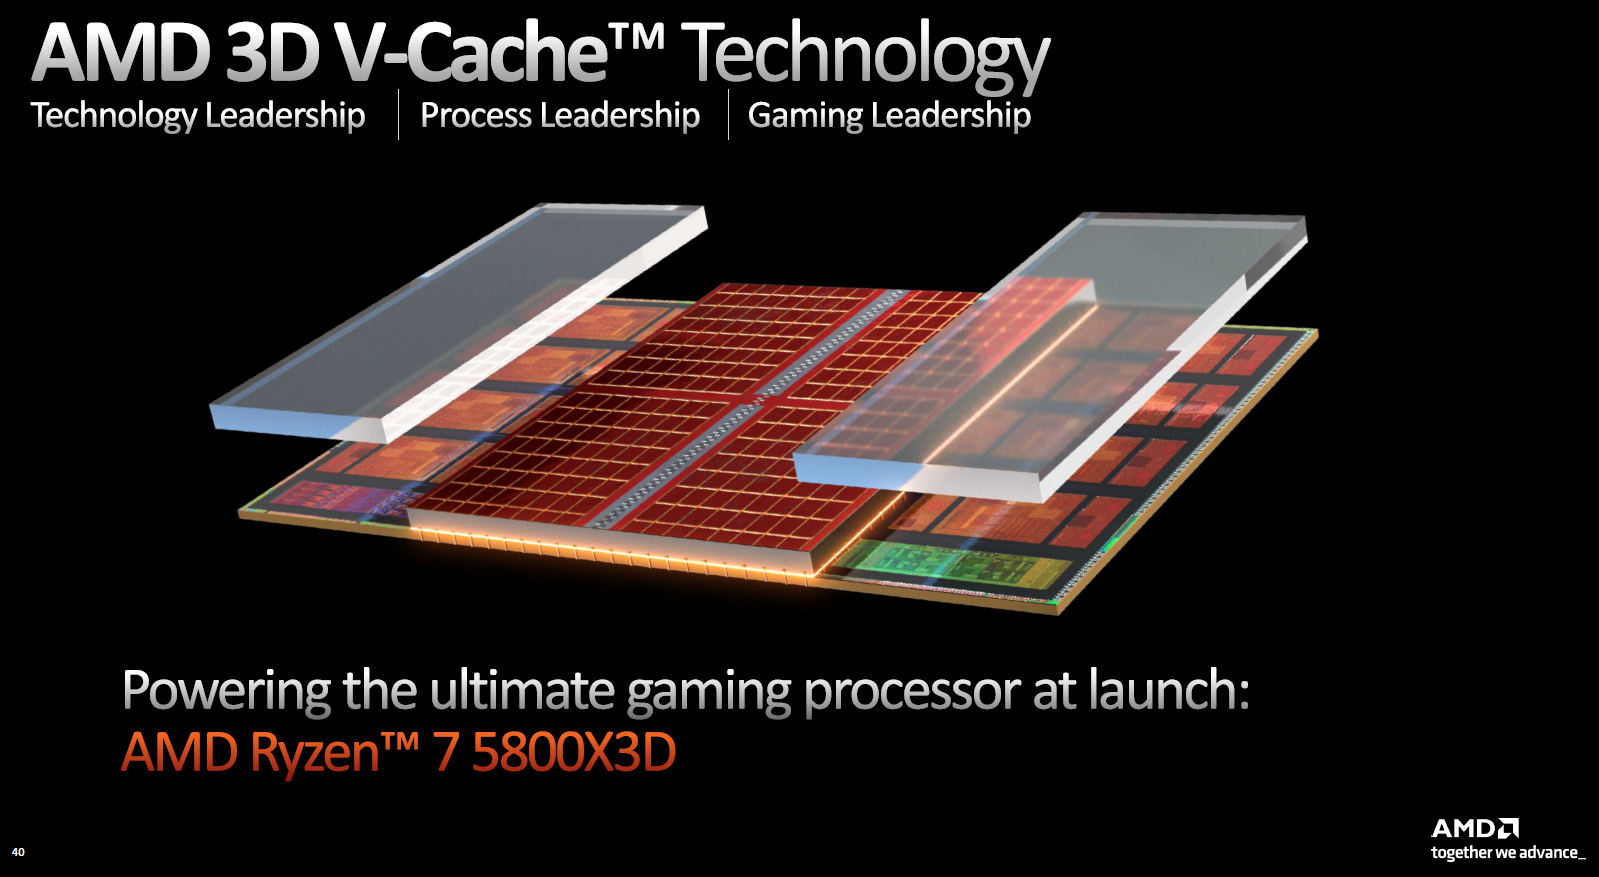 AMD Ryzen™ 7 7800X3D Gaming Processor